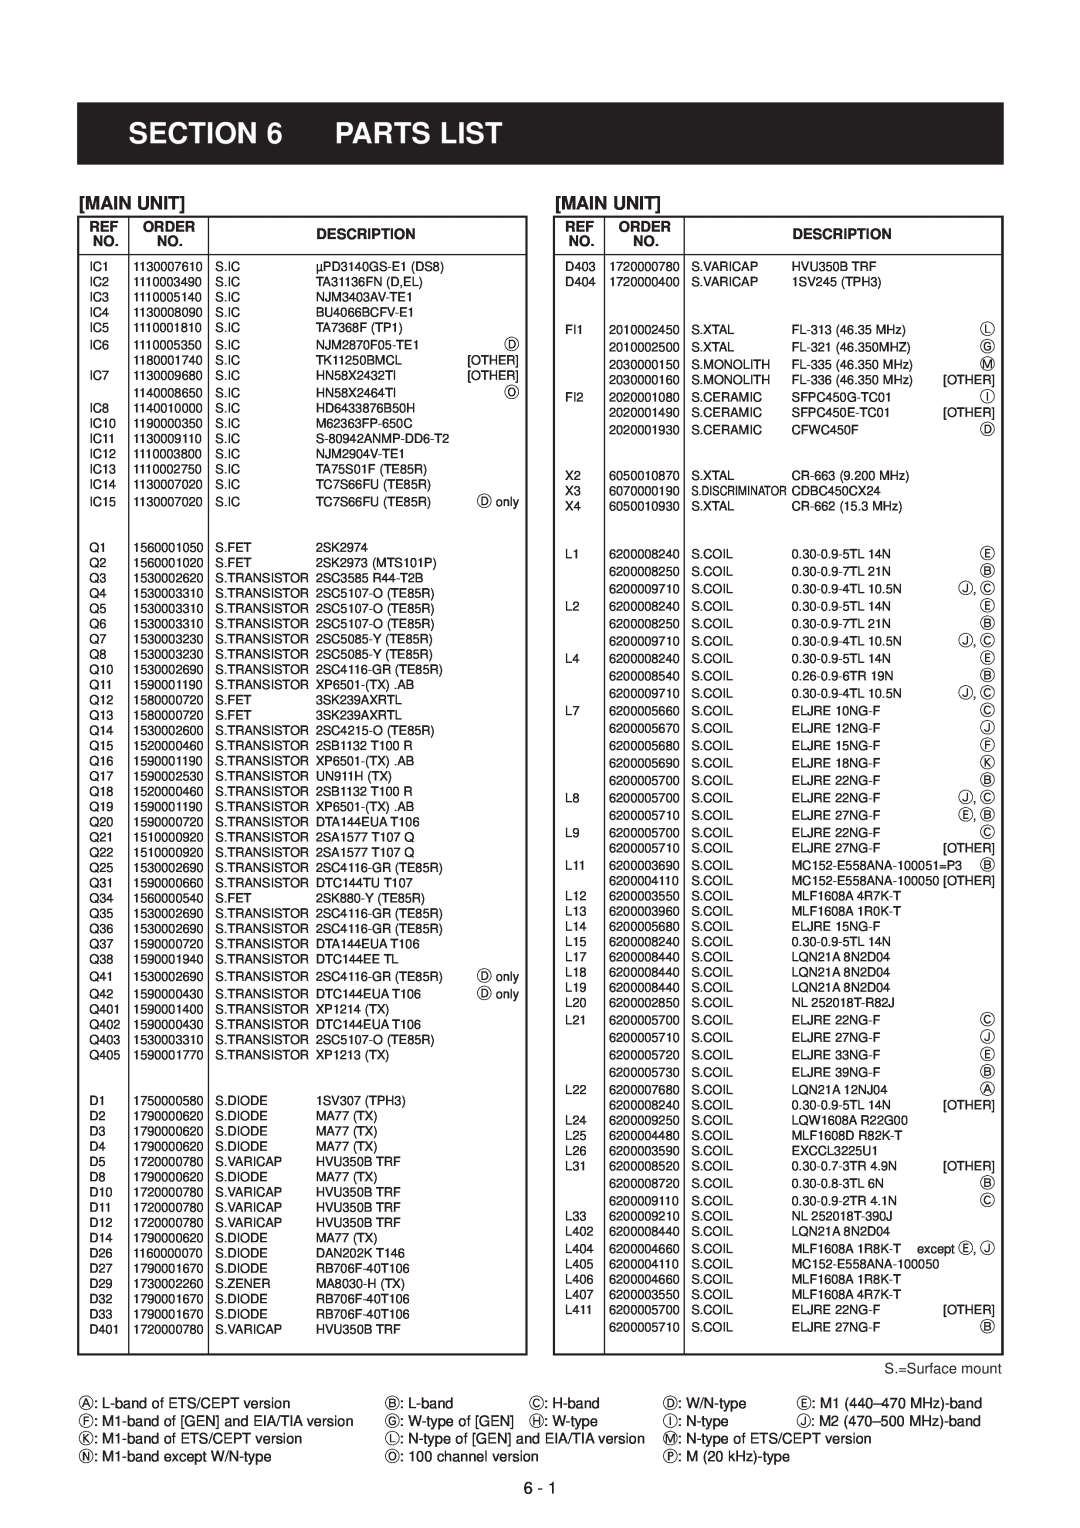 Icom IC-F3GS, IC-F3GT service manual Parts List, Main Unit, Order, Description 